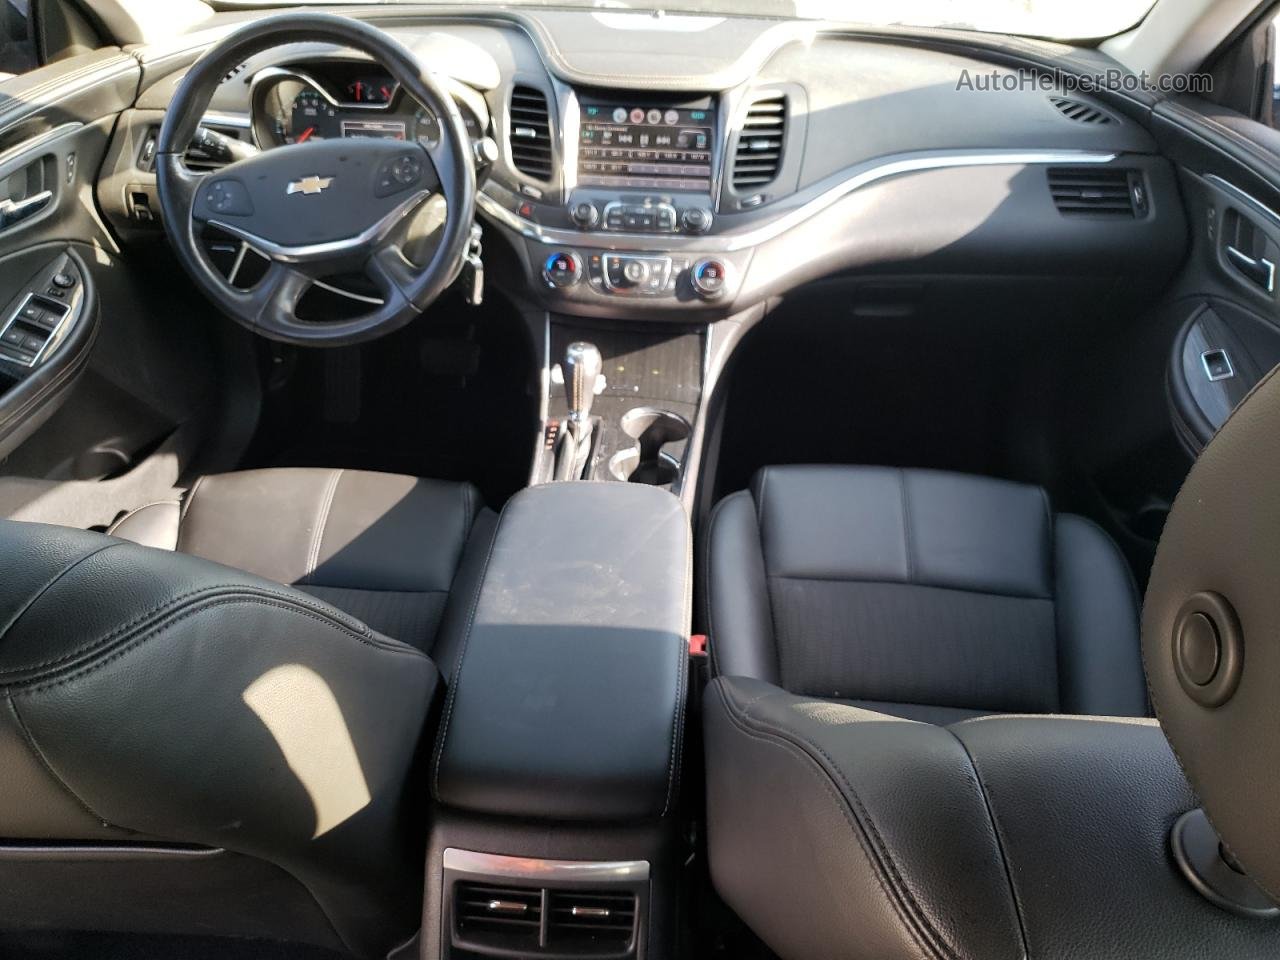 2016 Chevrolet Impala Lt Синий vin: 2G1105SA9G9194625